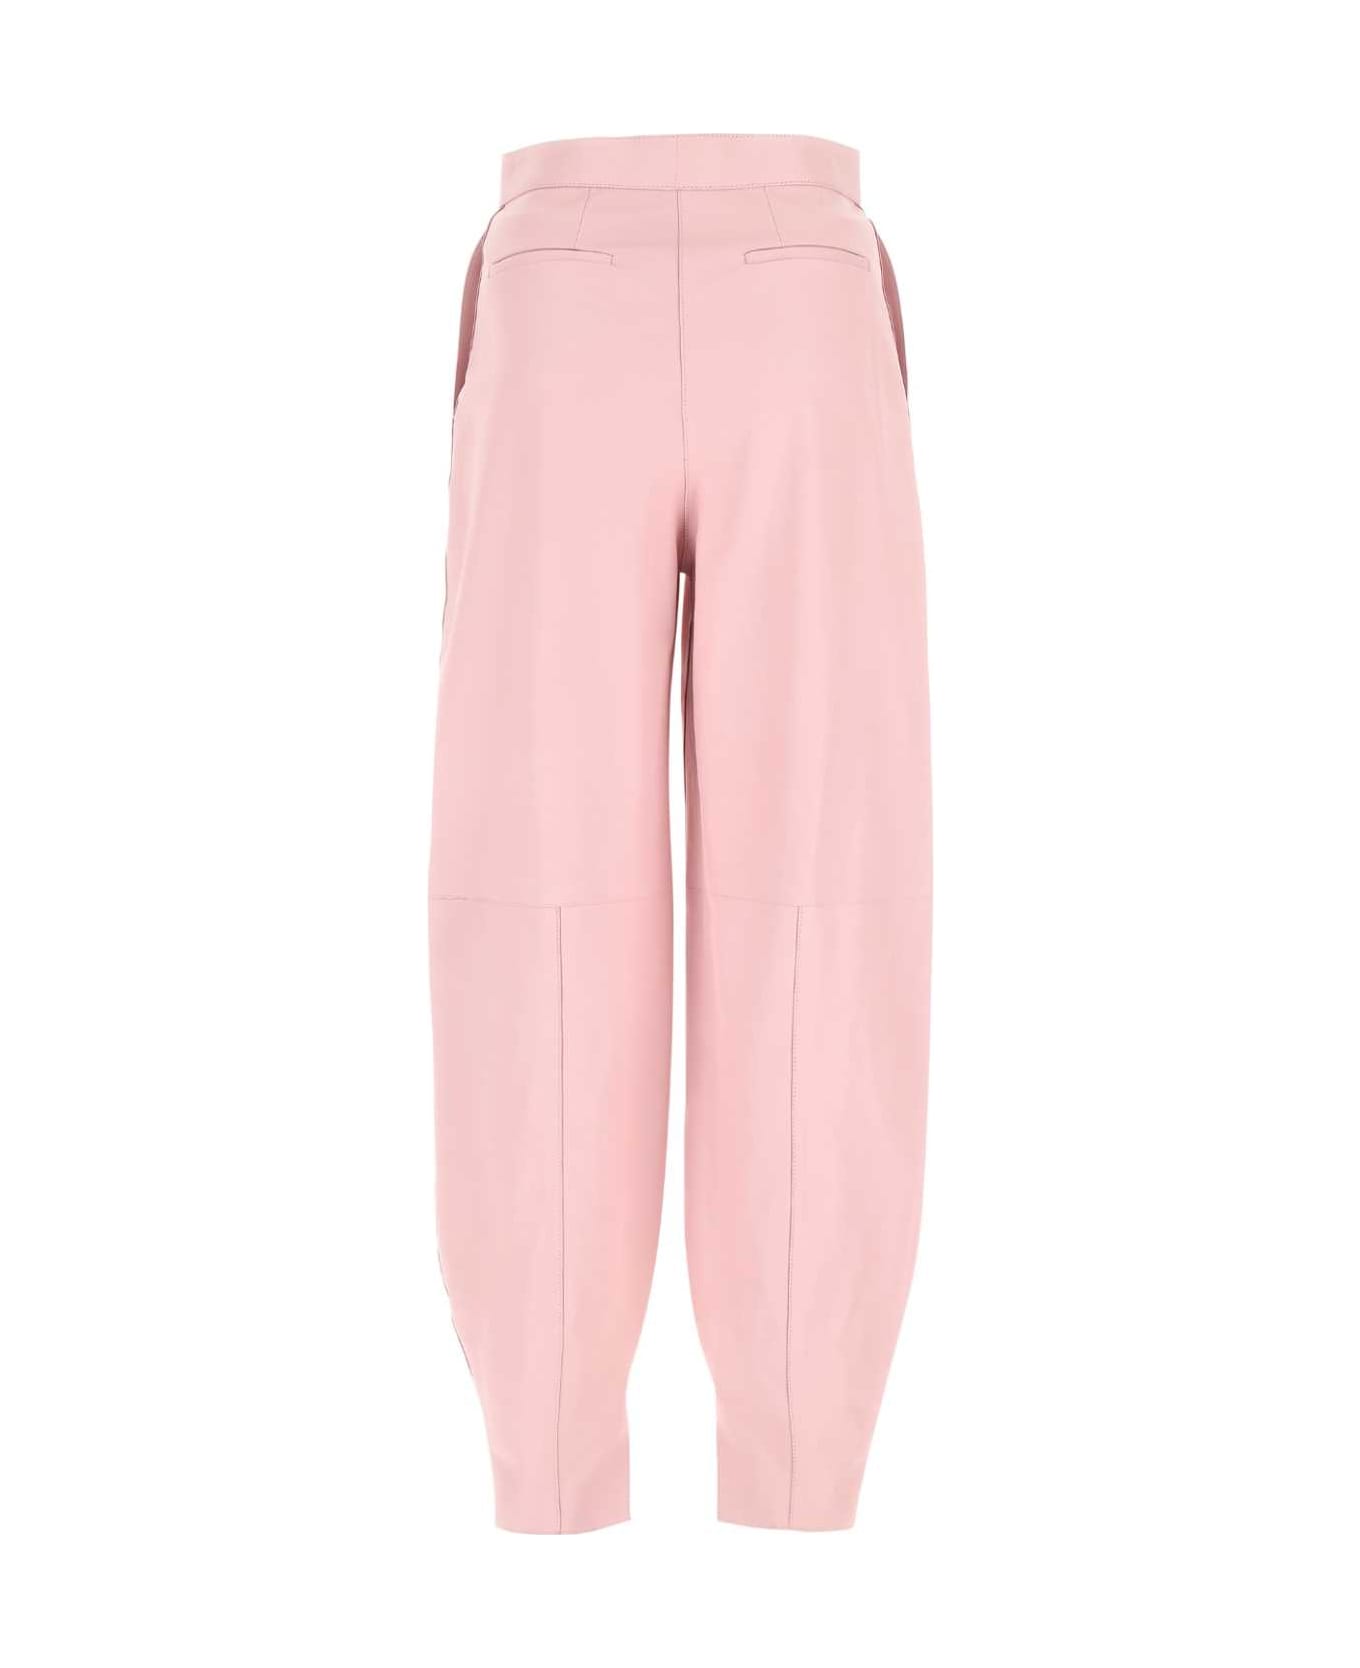 Loewe Pastel Pink Leather Pant - LIGHTPINK スウェットパンツ